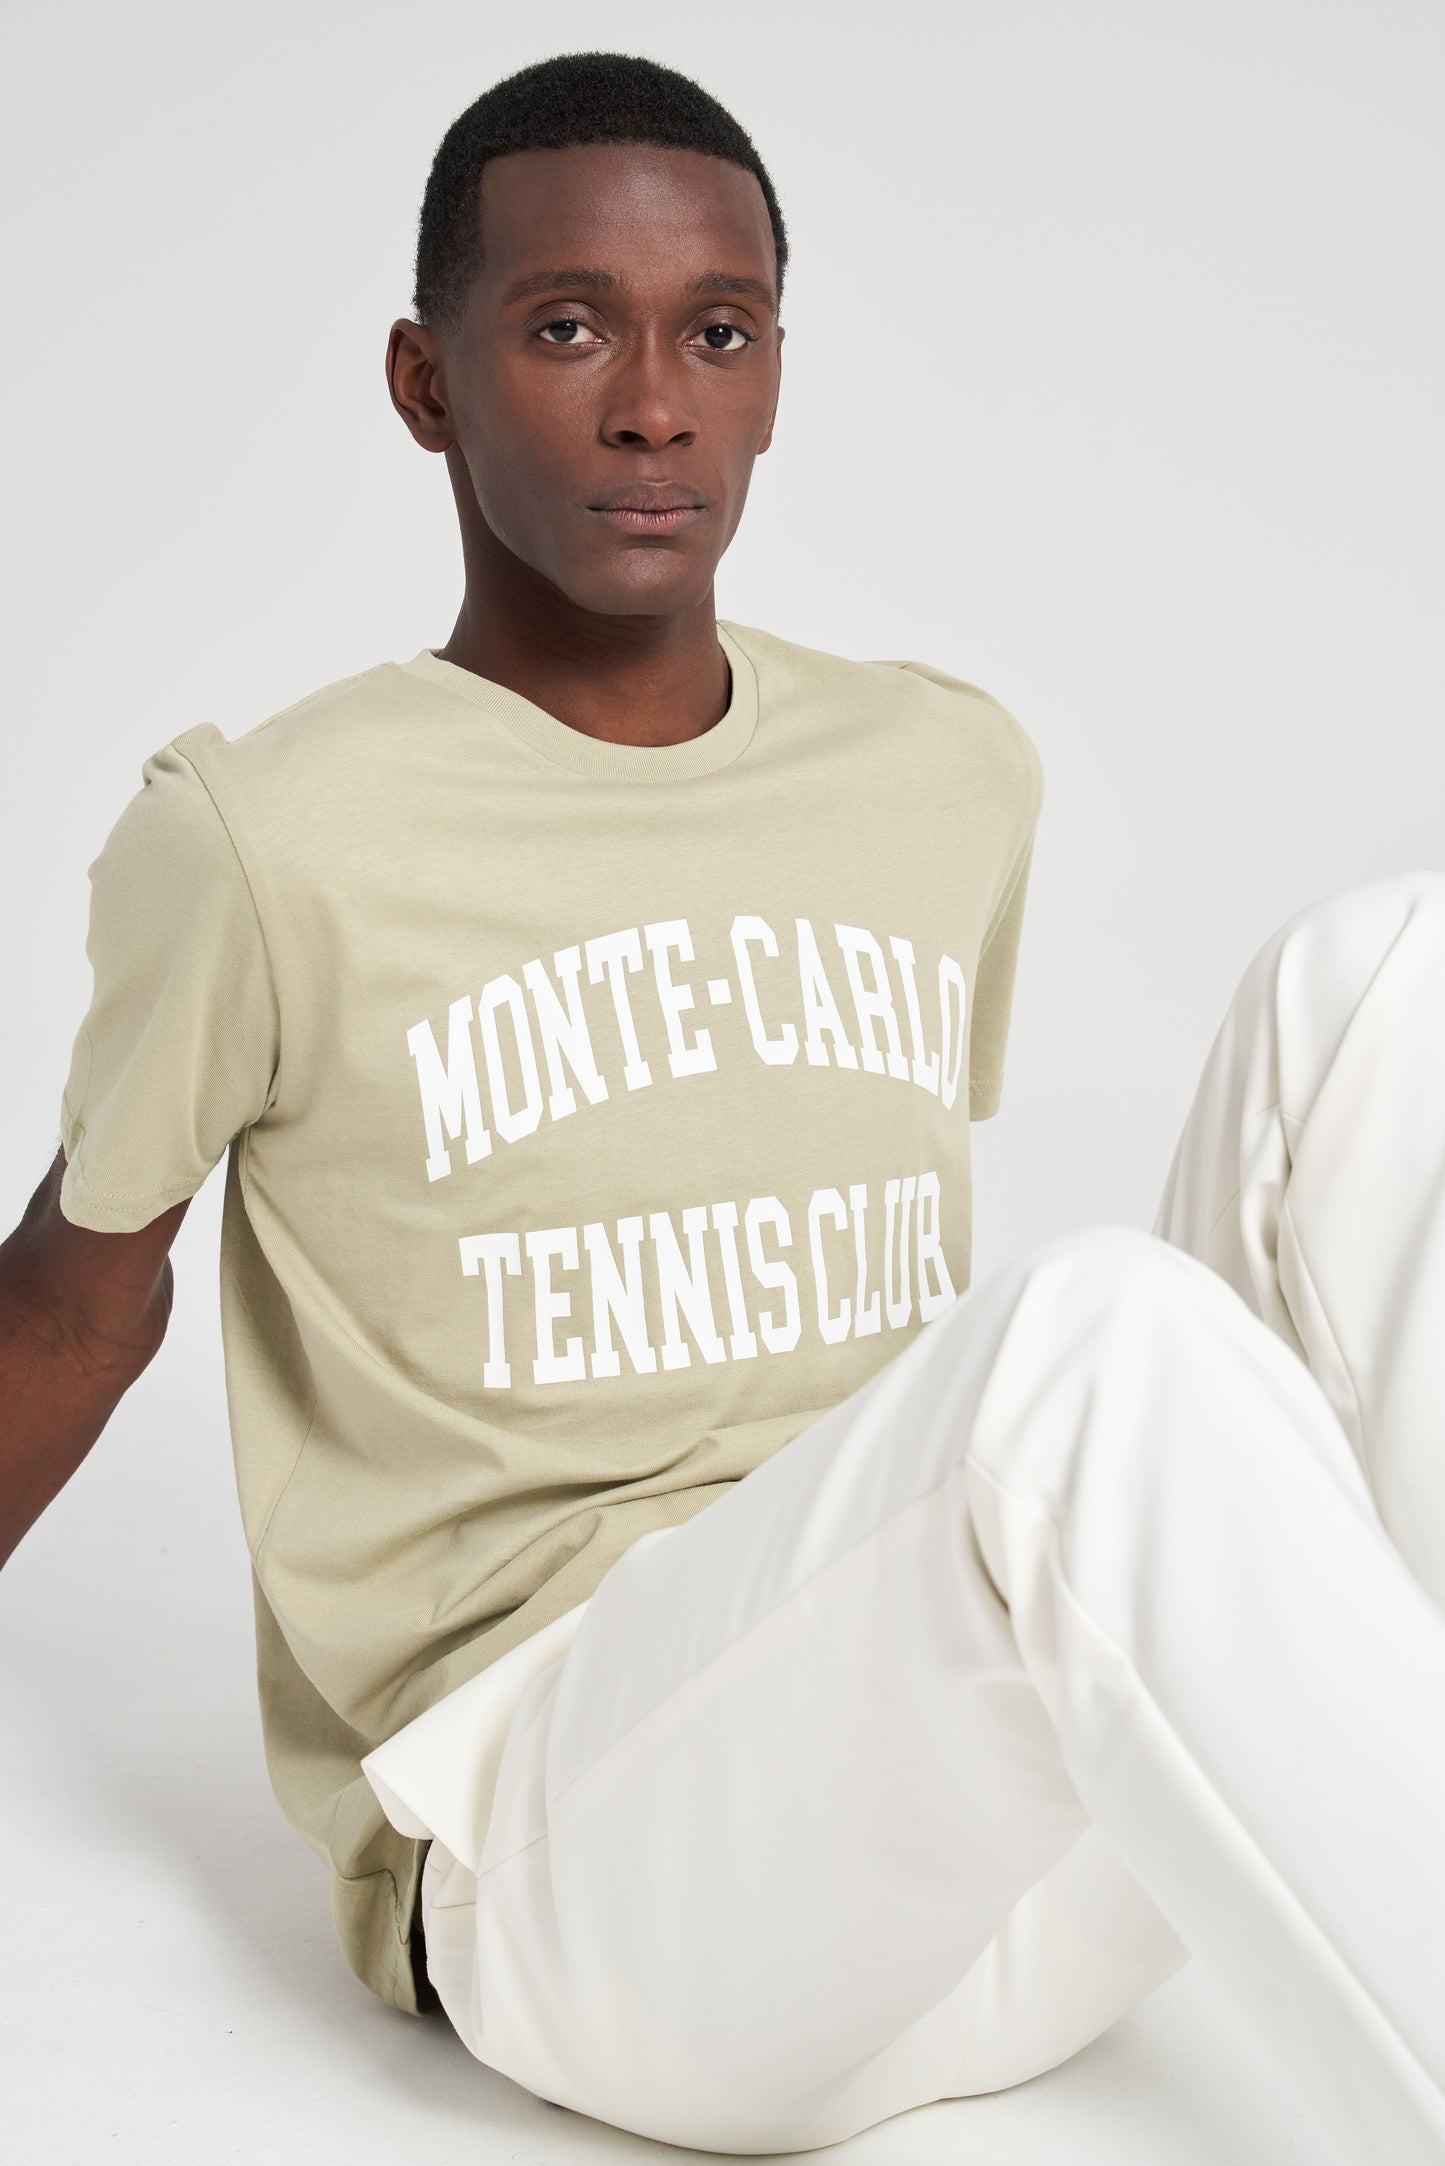 Monte-Carlo Tennis Club T-shirt- Sage